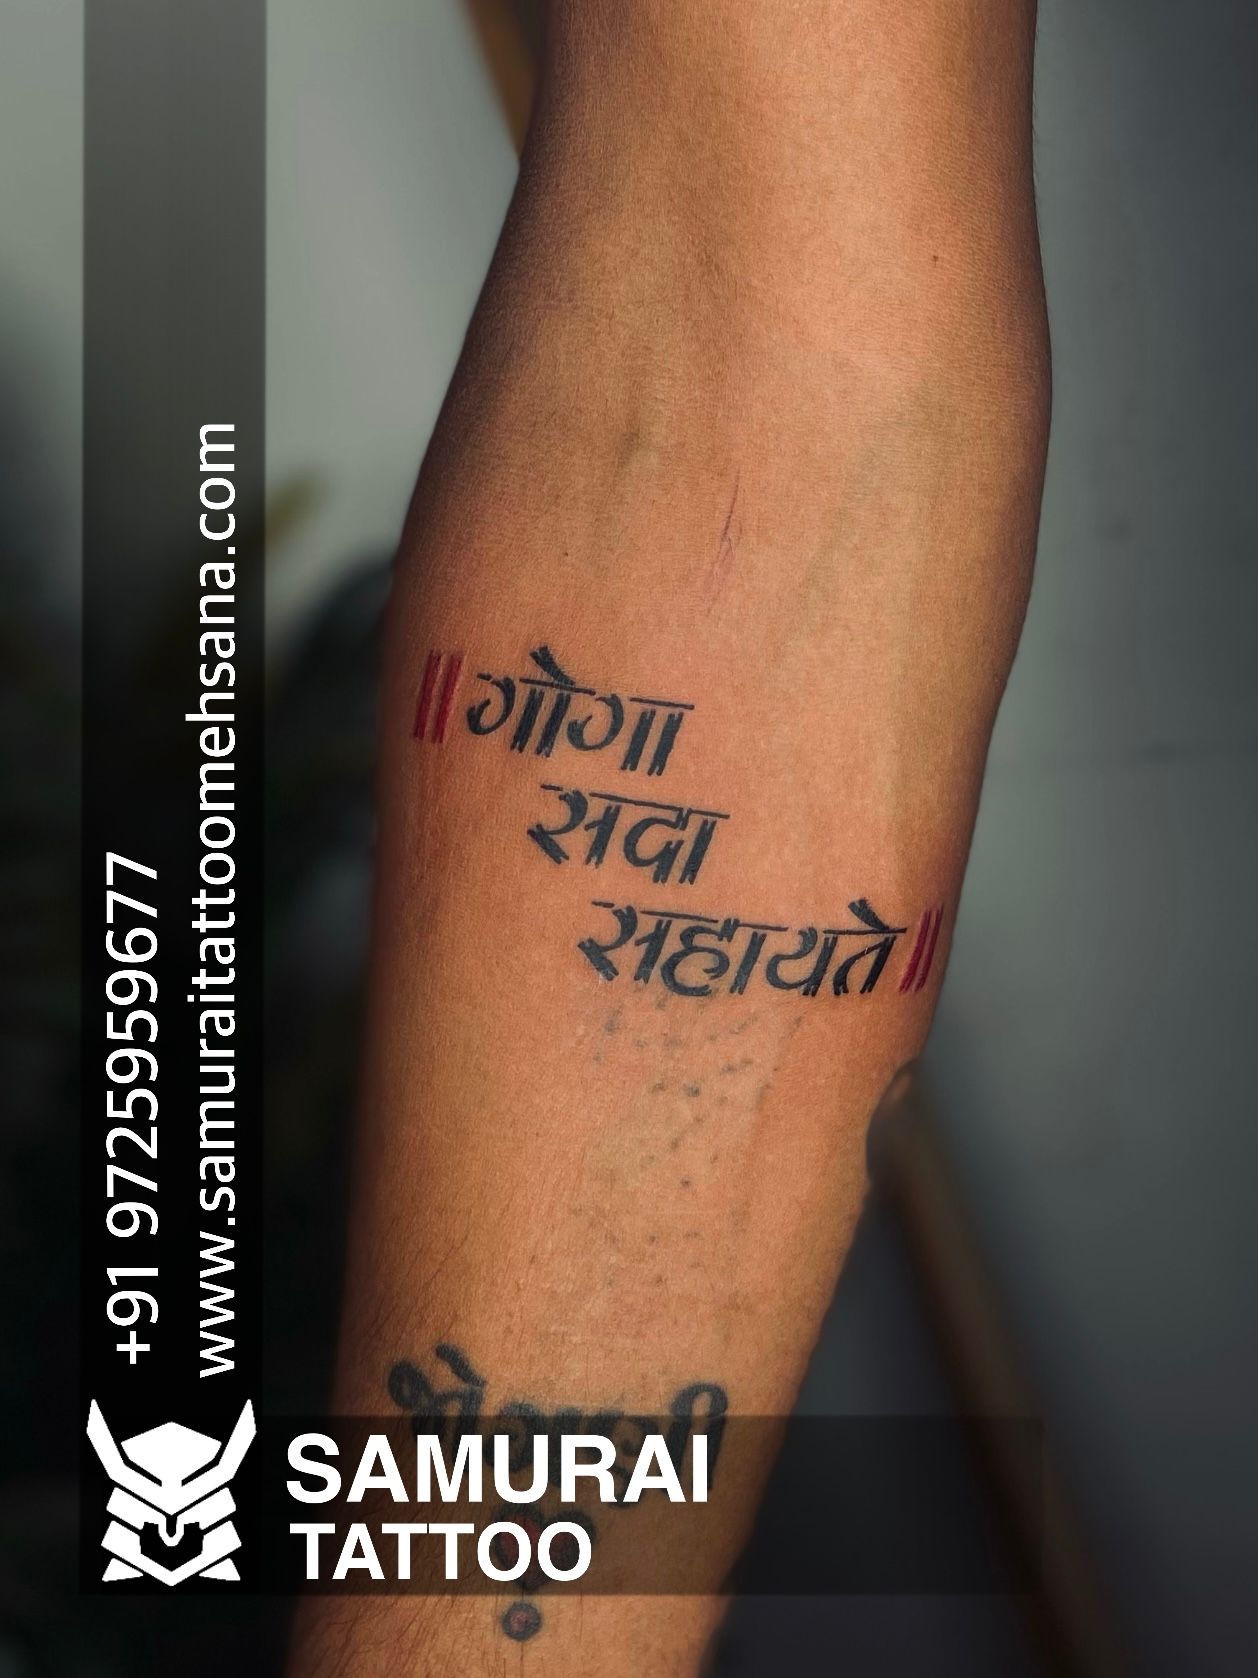 goga maharaj tattoo - YouTube